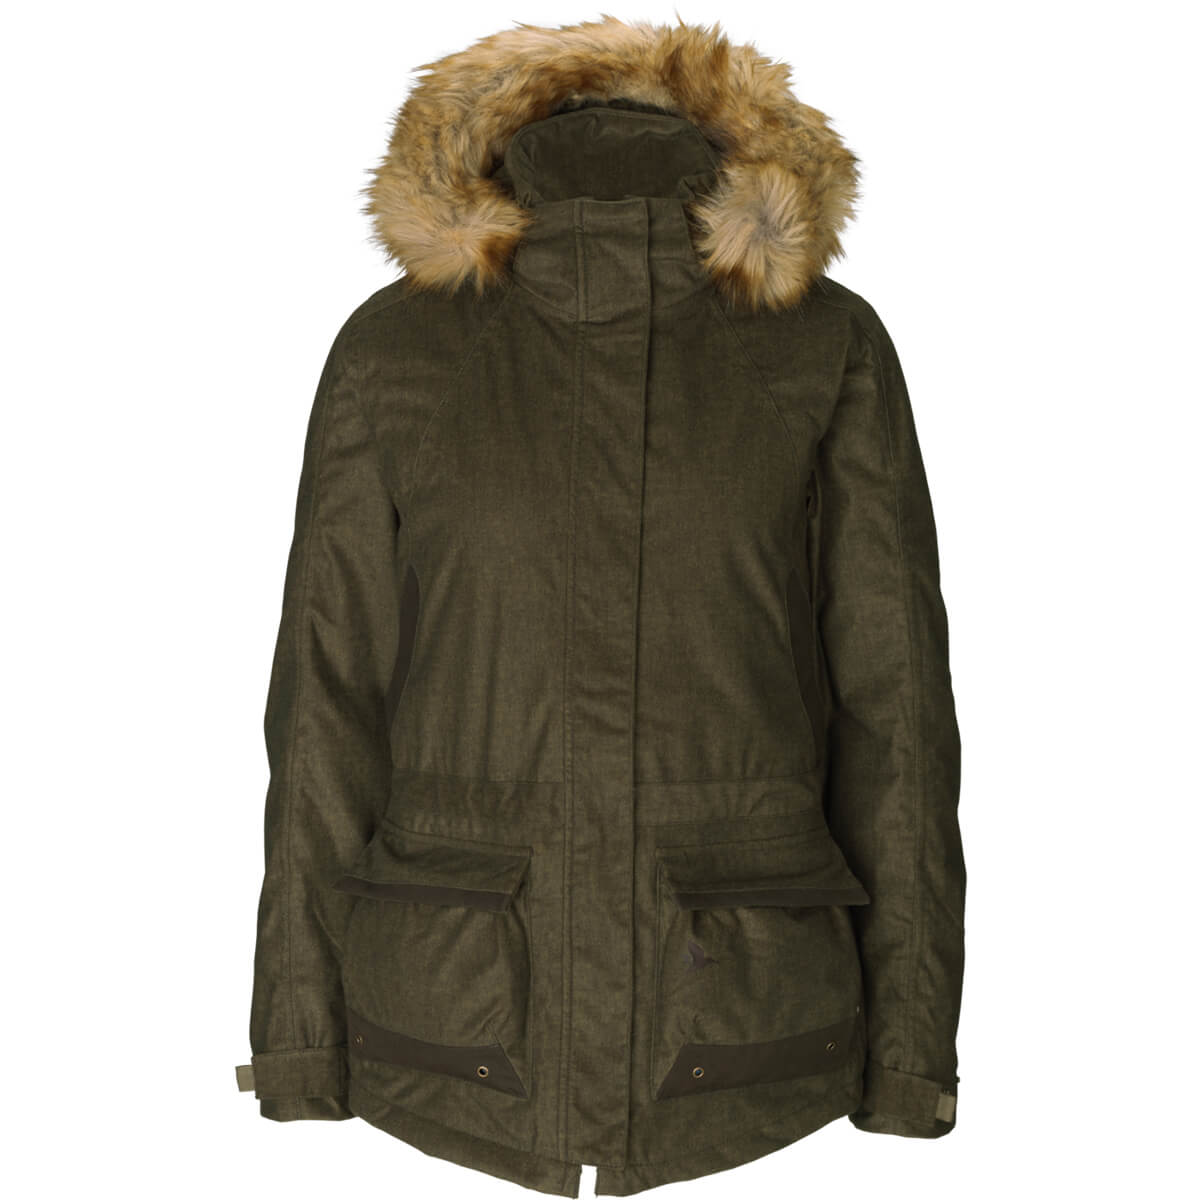 Seeland Jacket Lady North - Winter Hunting Clothing